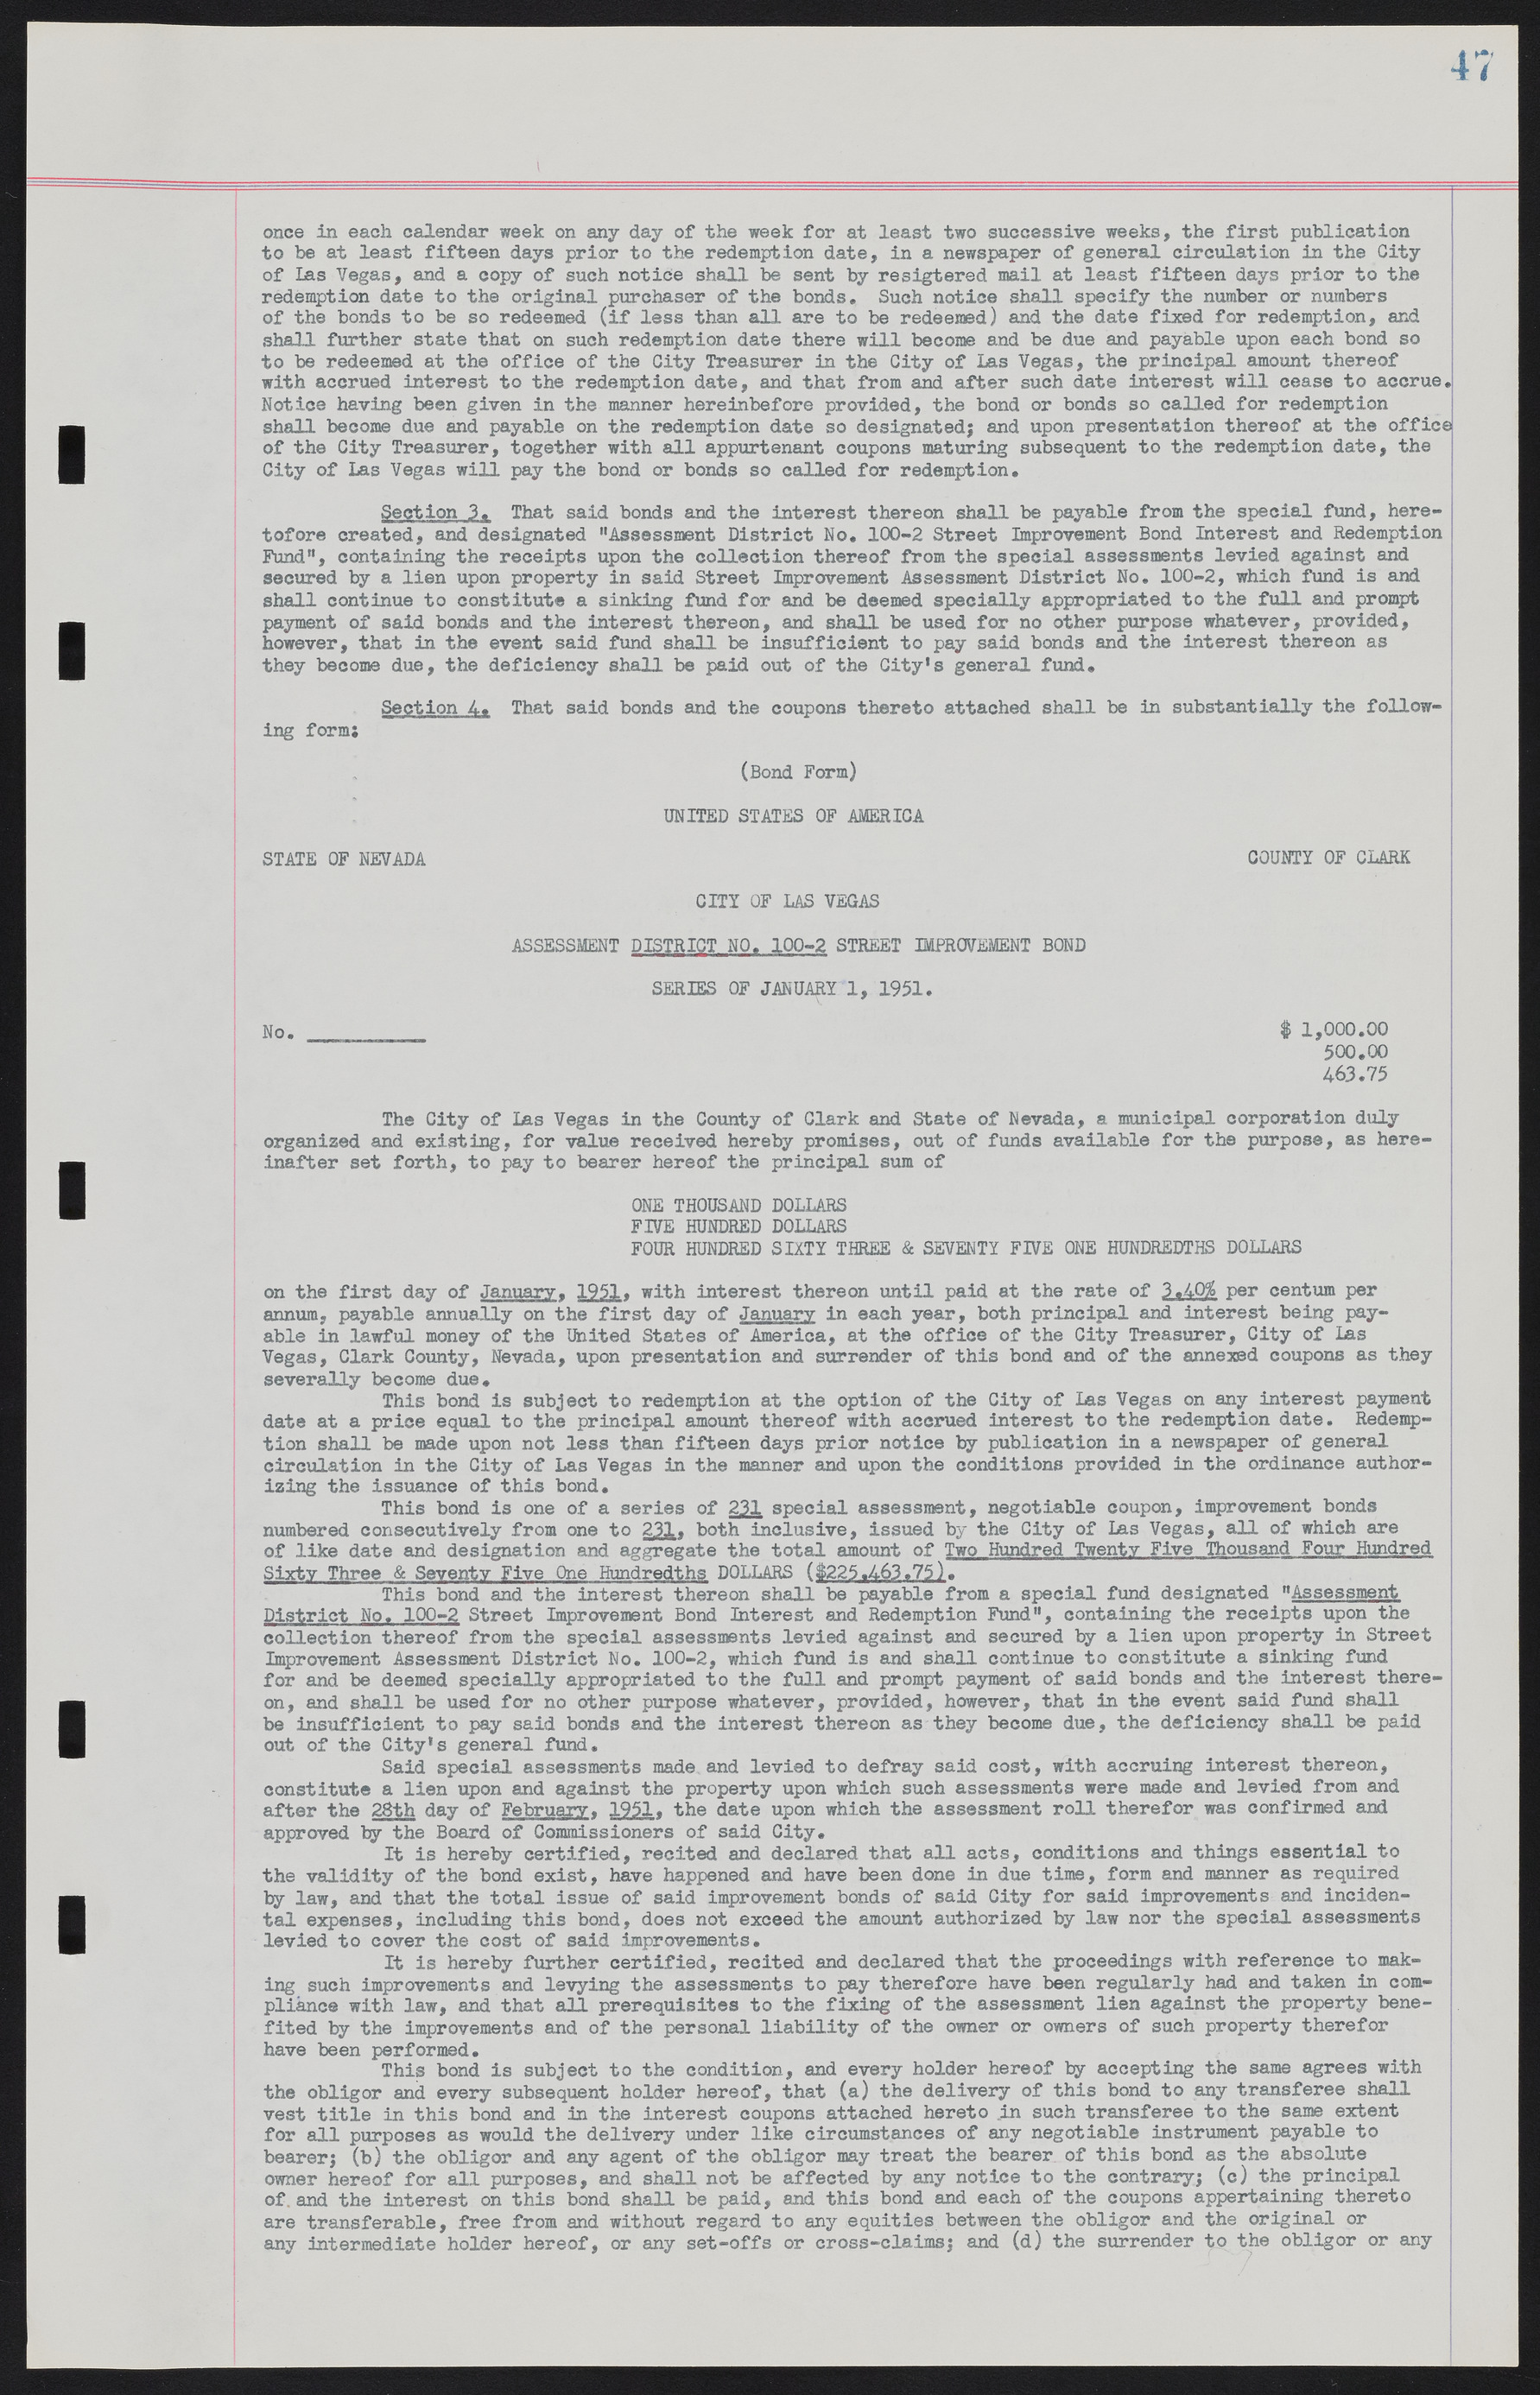 Las Vegas City Ordinances, November 13, 1950 to August 6, 1958, lvc000015-55